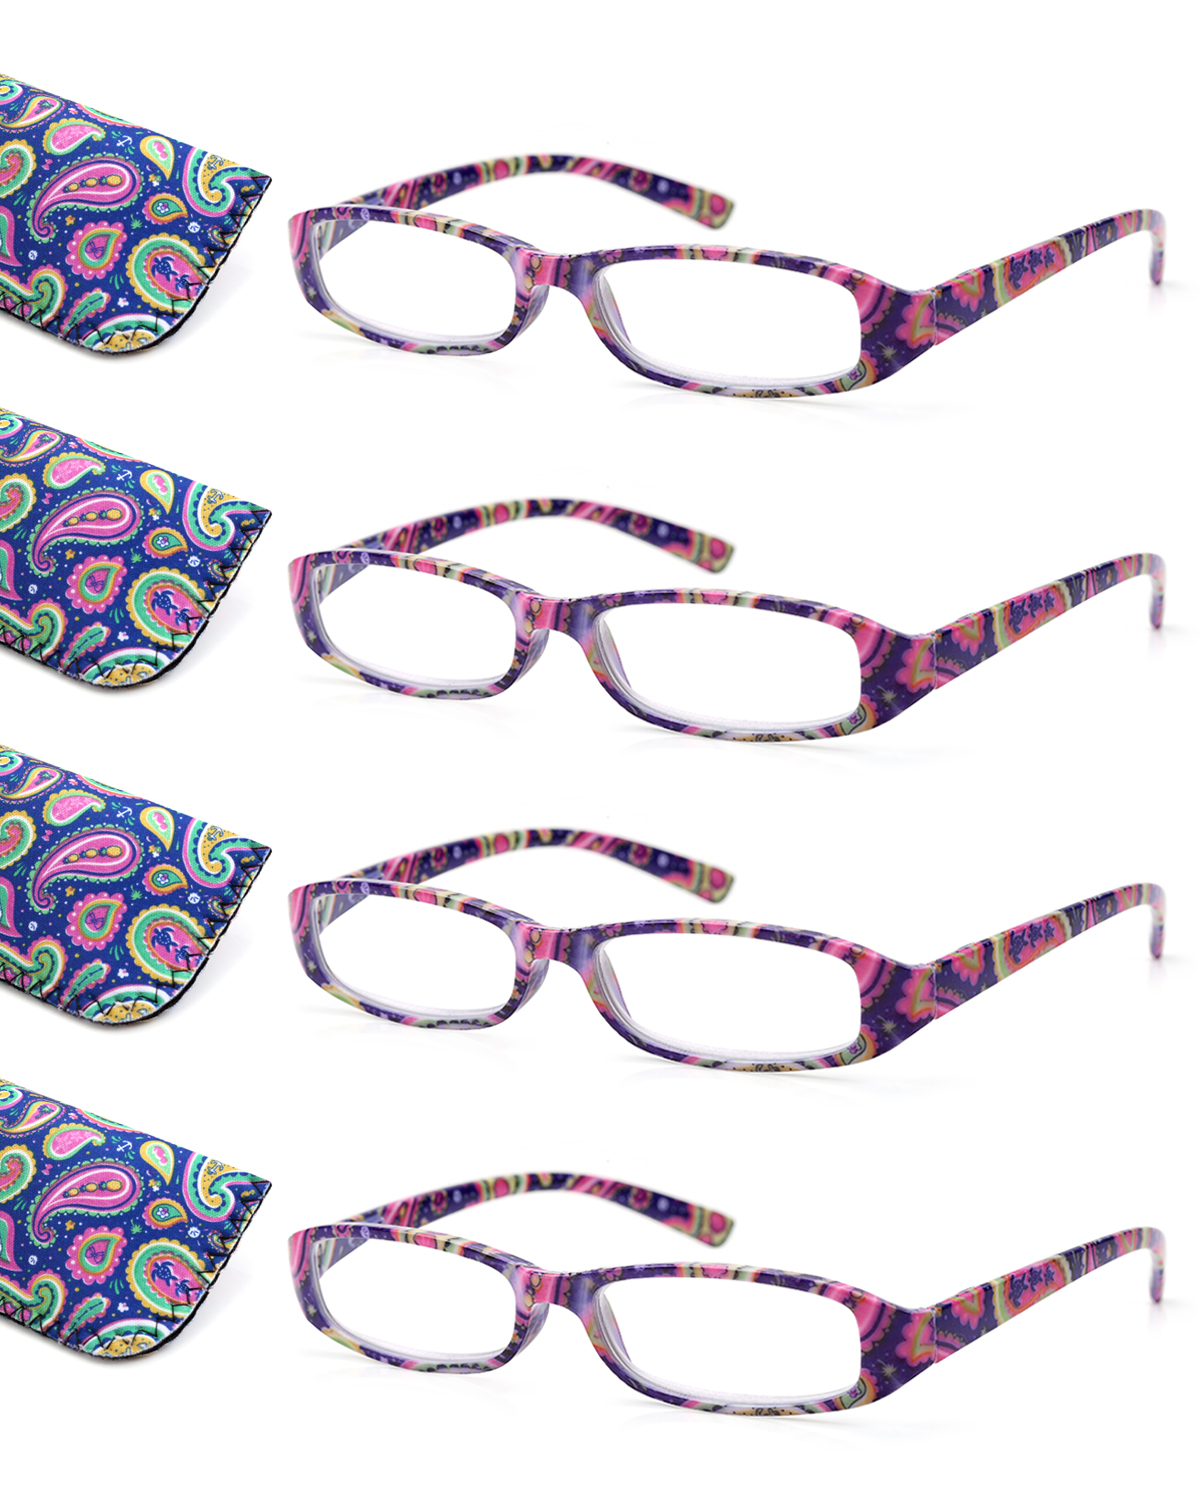 LUFF Reading Glasses for Women Blue Light Blocking,4 Pairs 4 Color Elegant Computer Glasses With Bling Diamond,Cat Eye Design